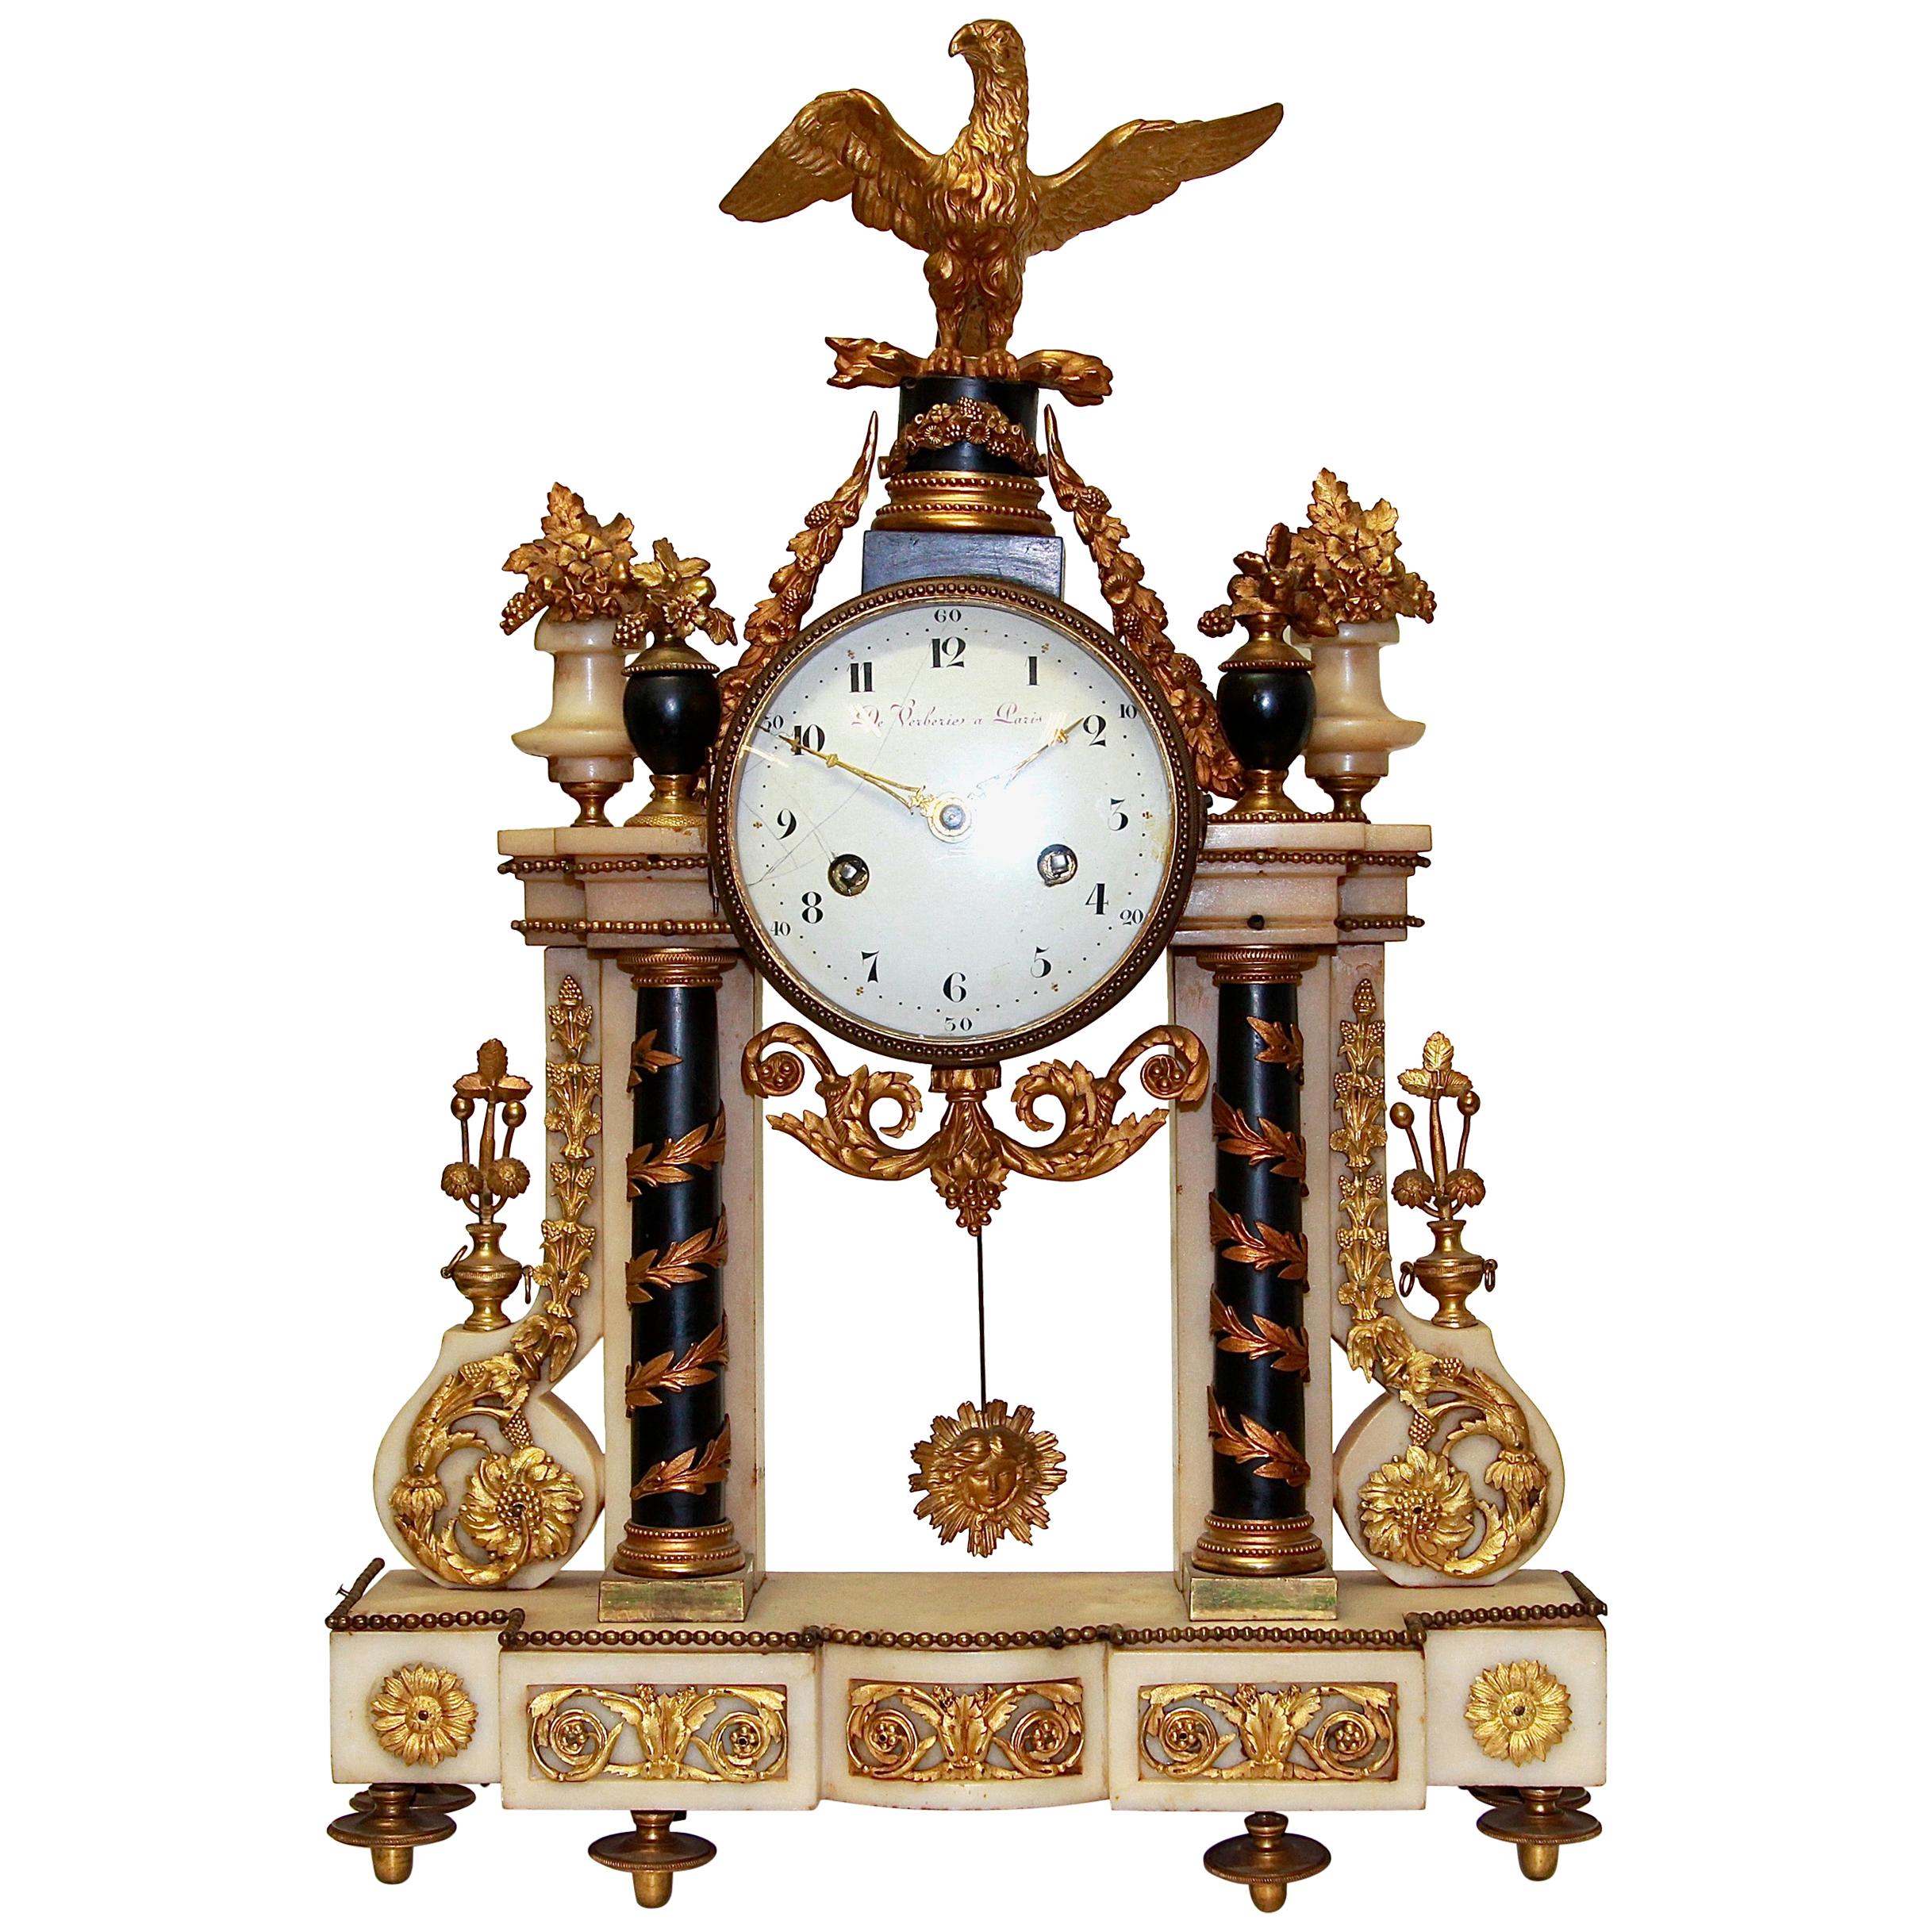 French Empire Ormolu Mantel Clock by Deverberie a Paris, Fire-Gilded